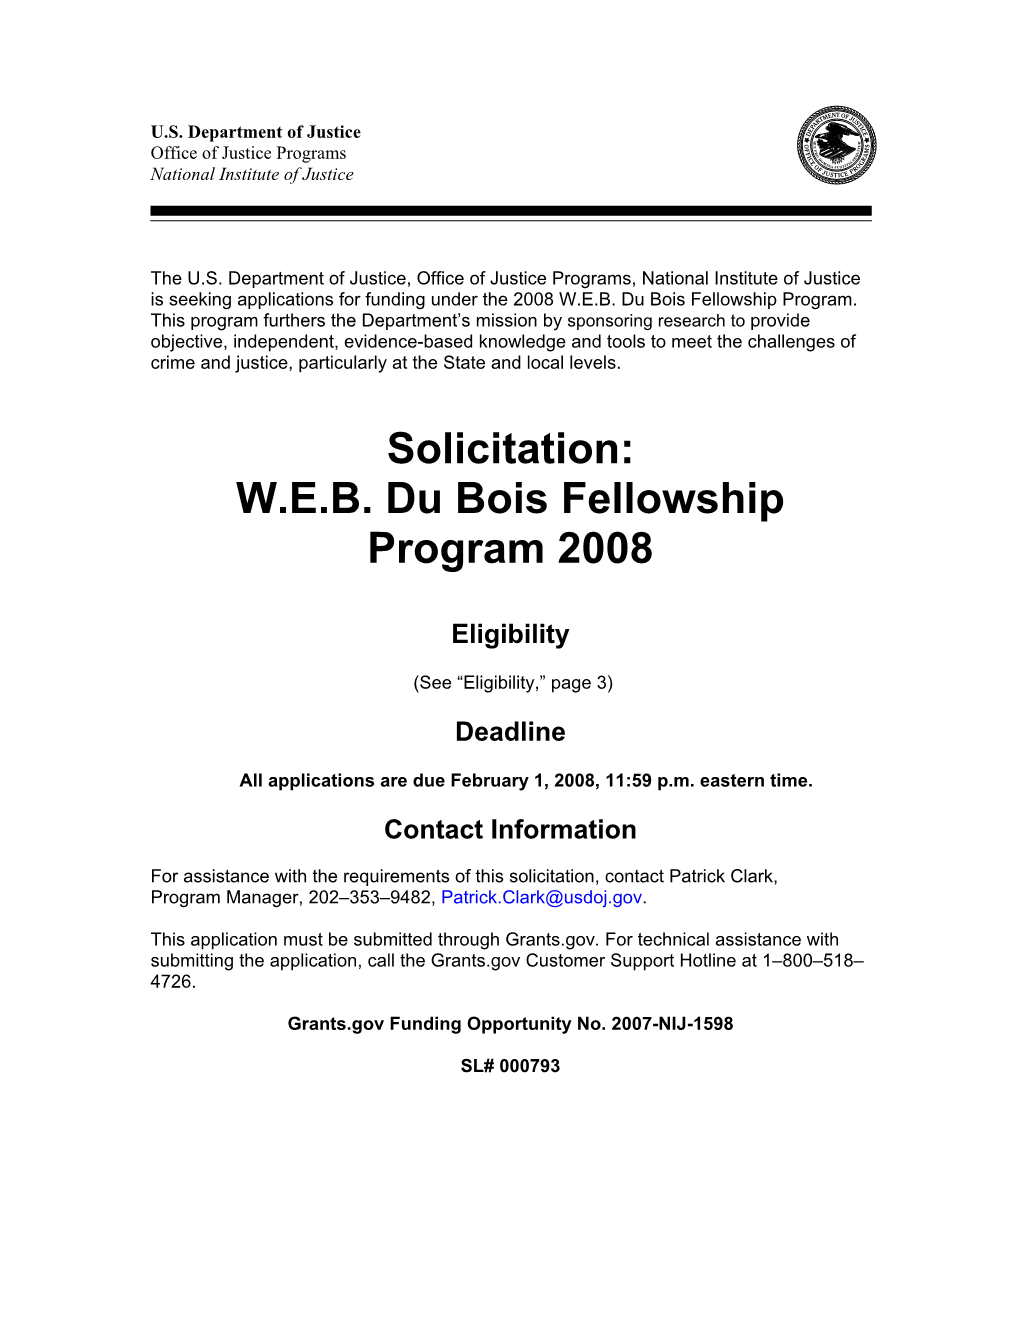 WEB Du Bois Fellowship Program 2008